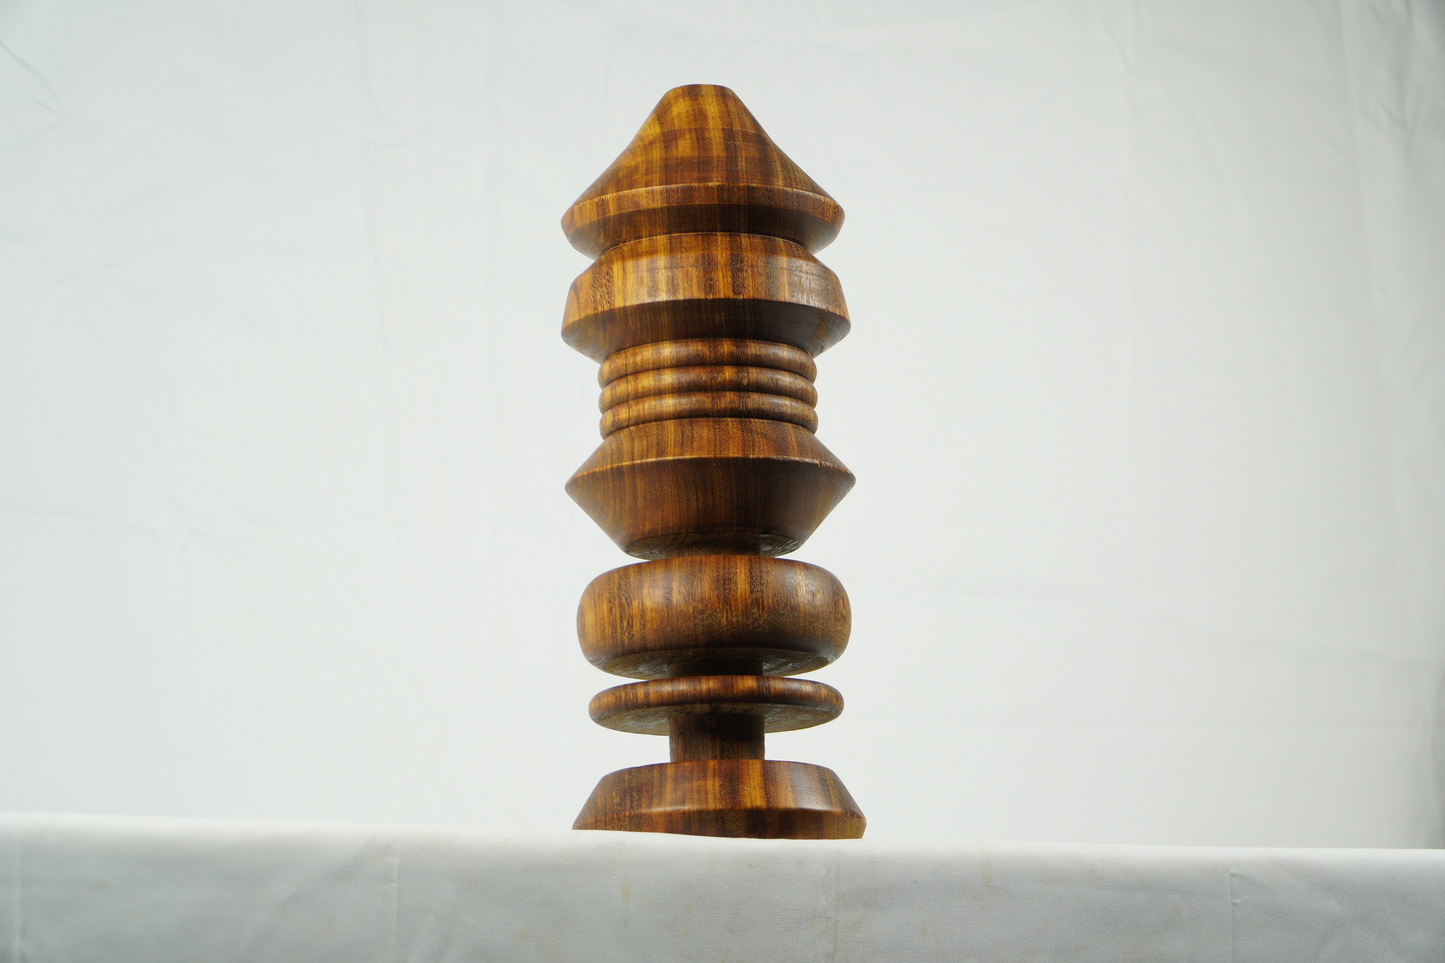 Wooden sculpture "Nimbo"